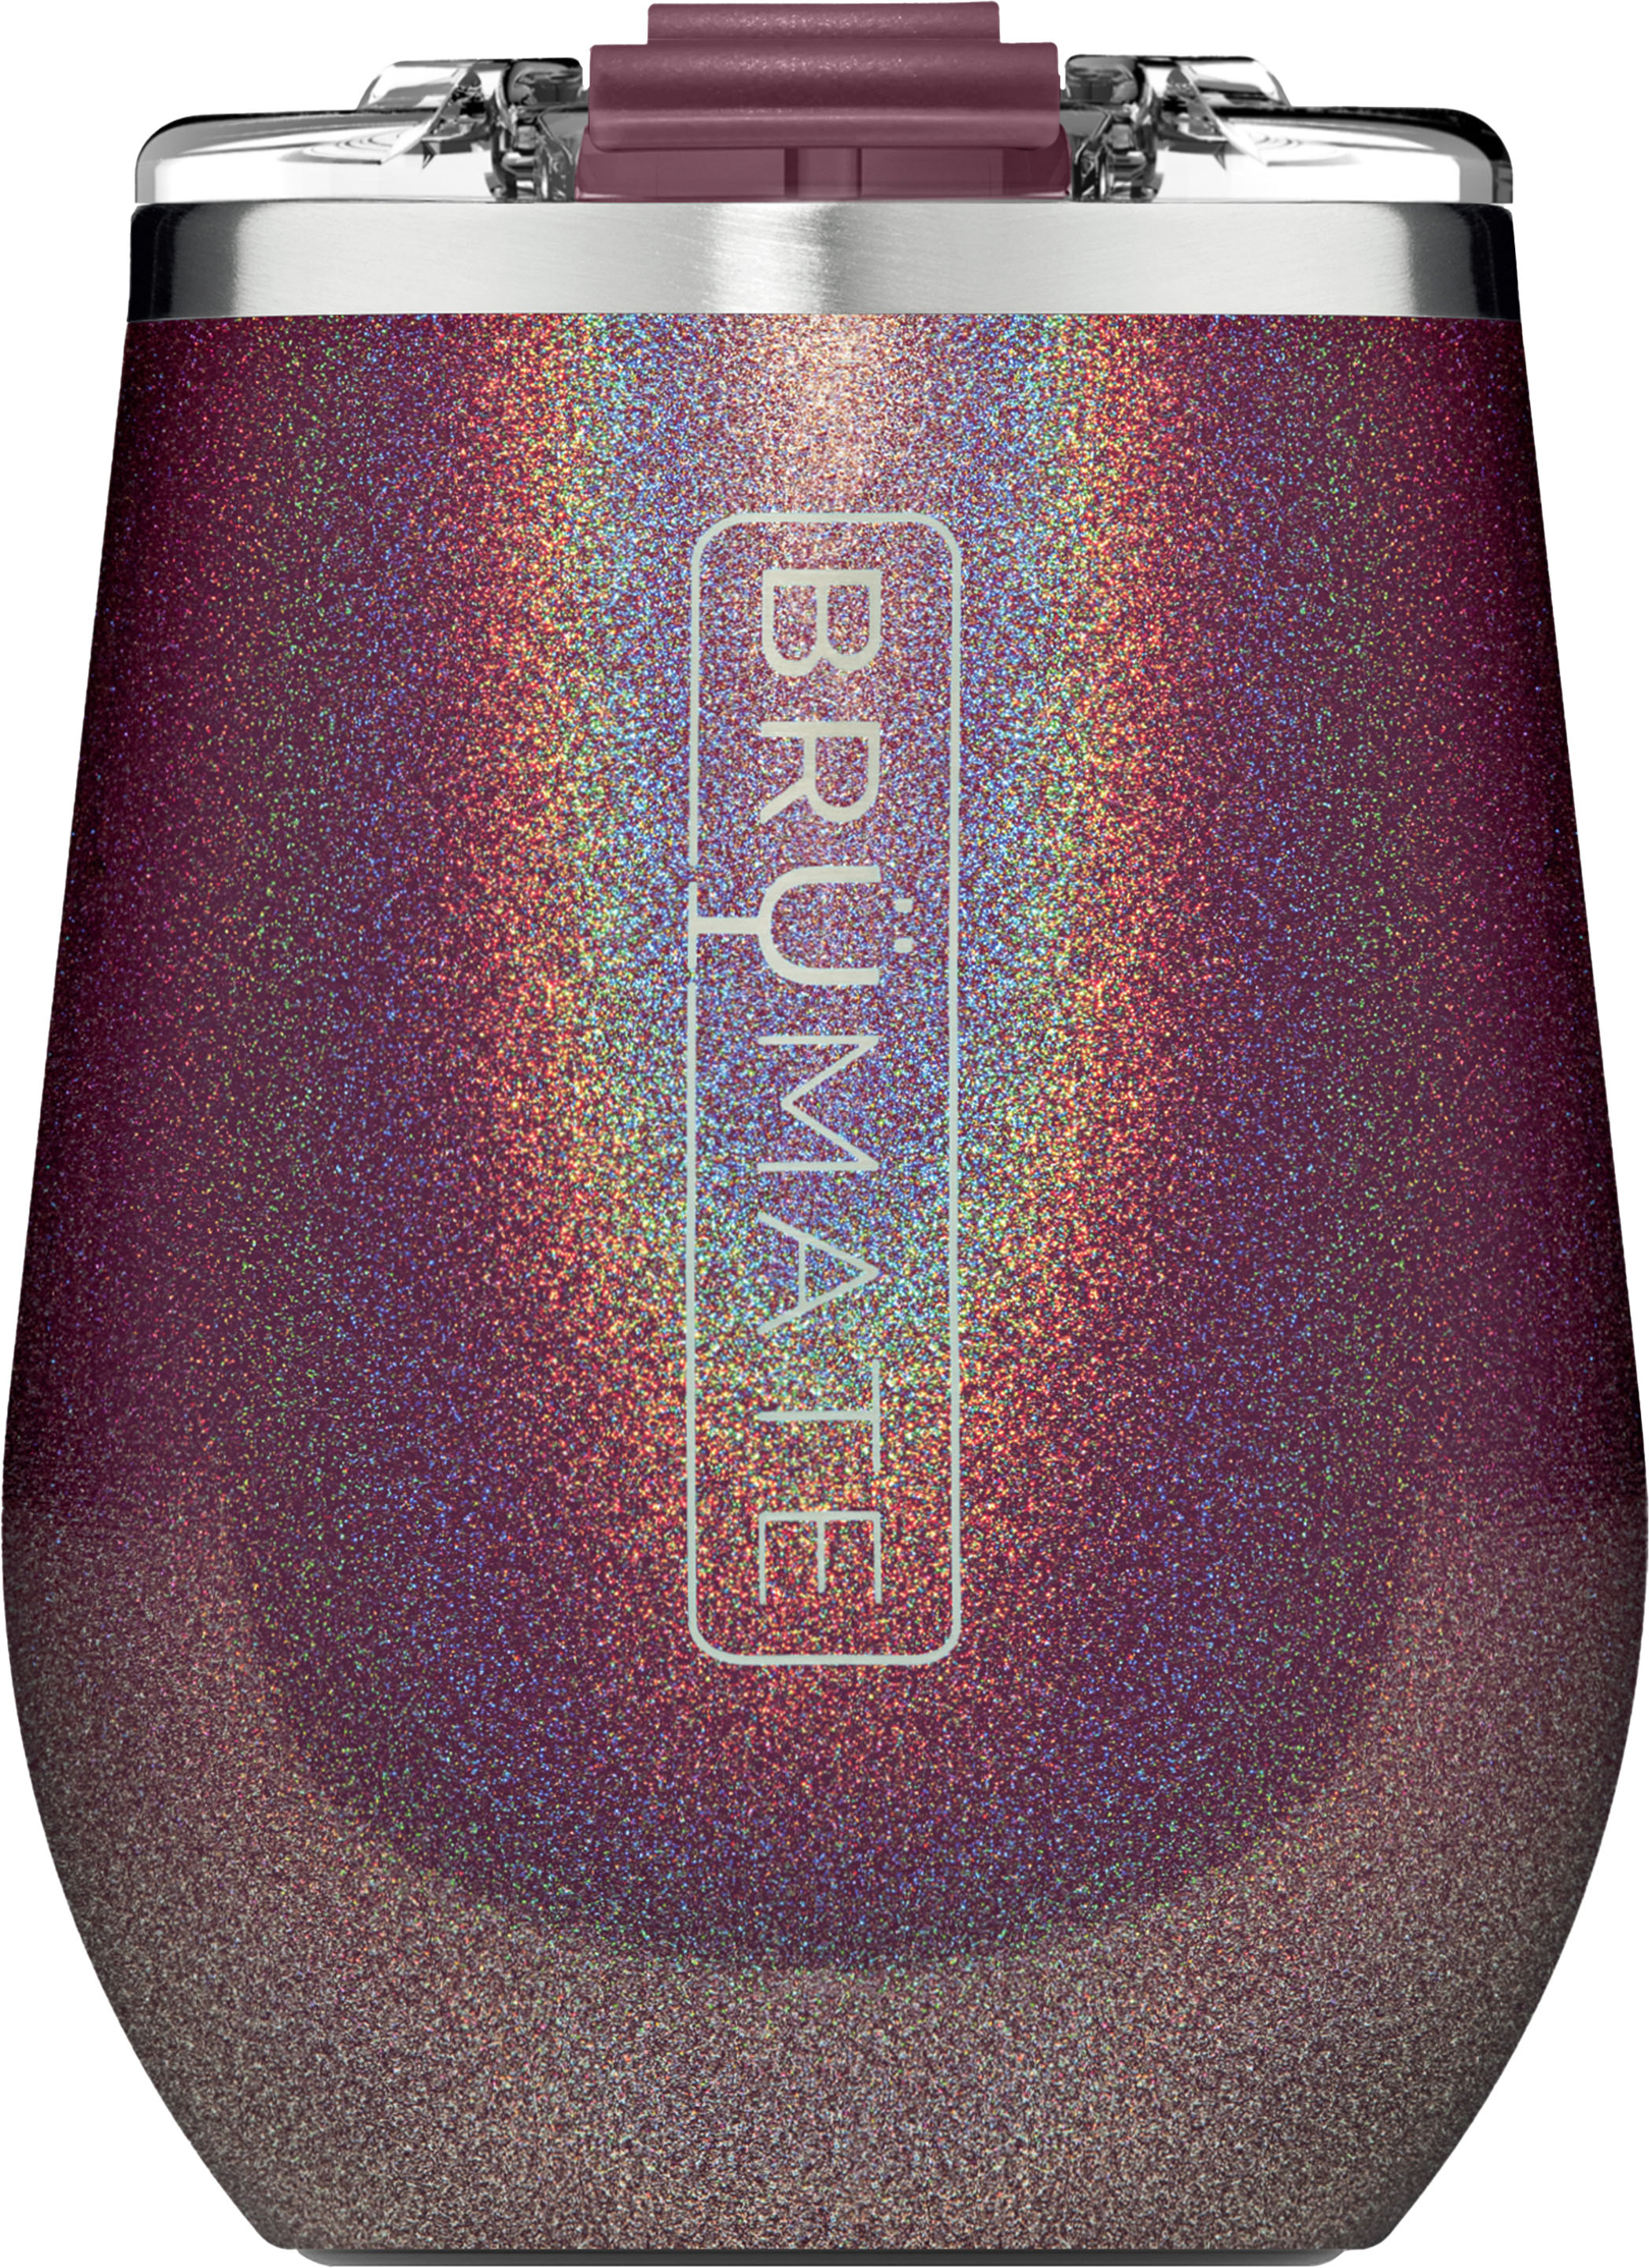 BruMate Imperial Pint | 20 oz - Glitter Mermaid